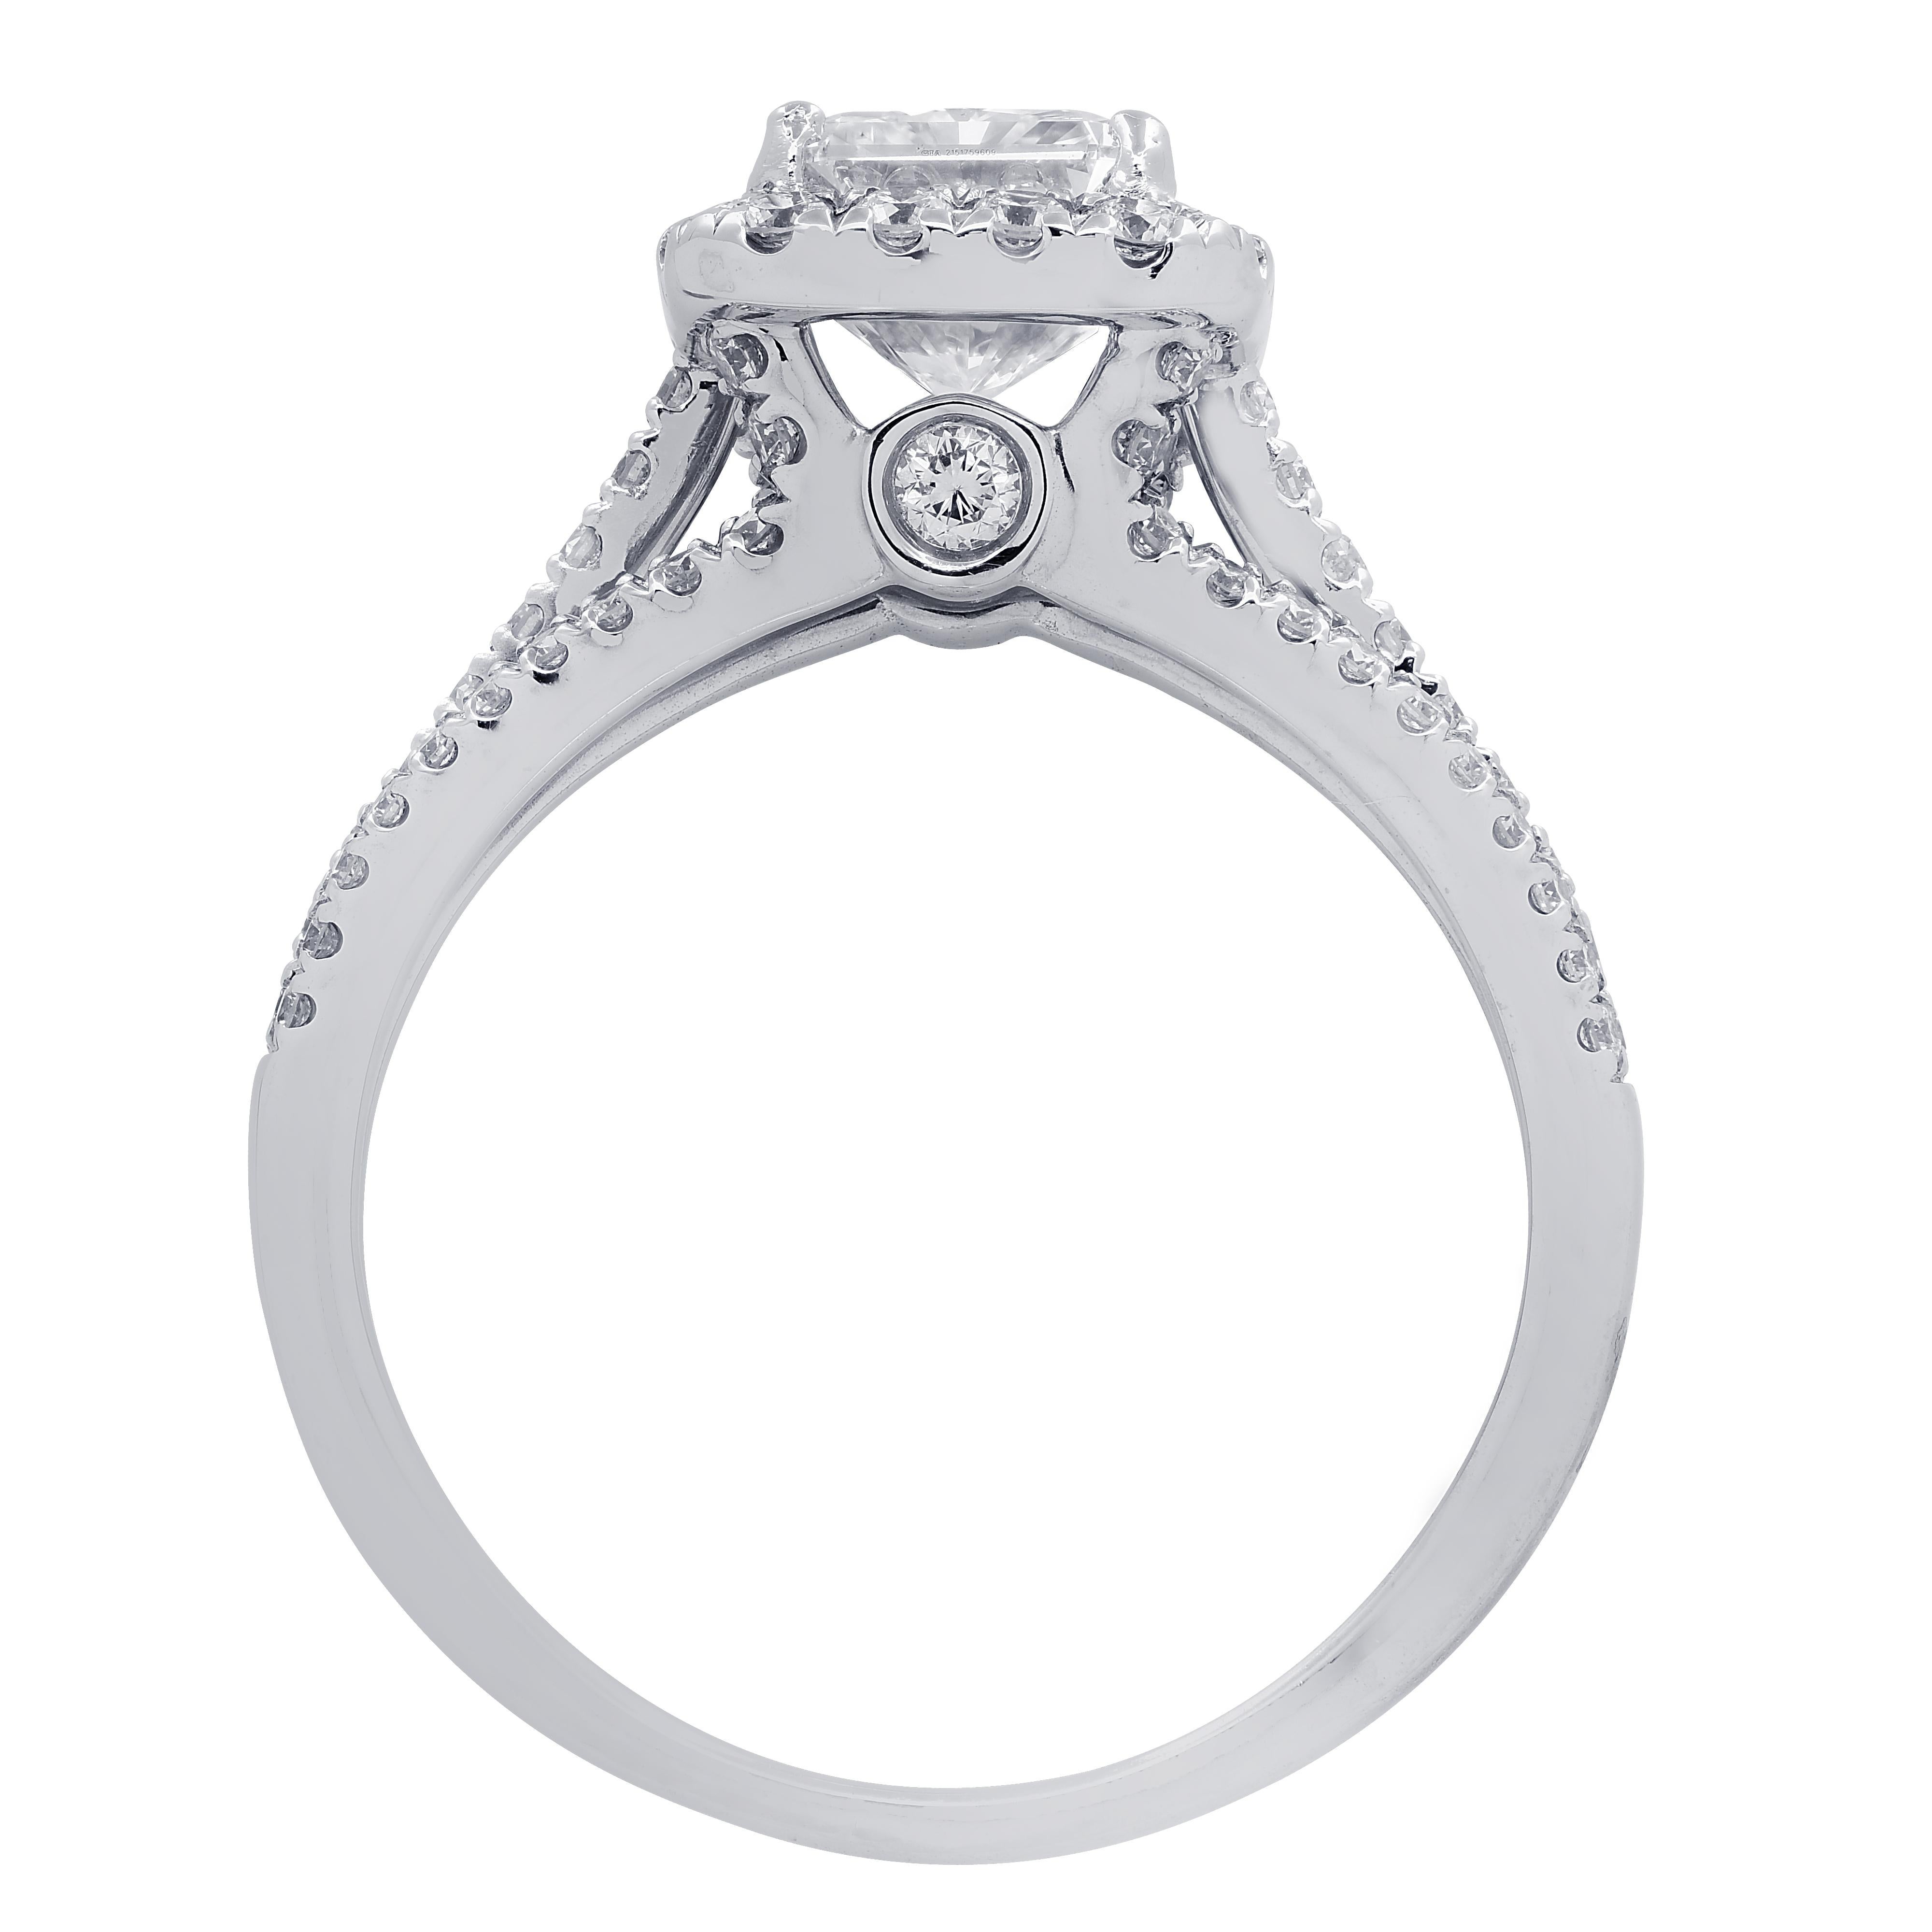 Radiant Cut Vivid Diamonds 1.51 Carat Diamond Engagement Ring